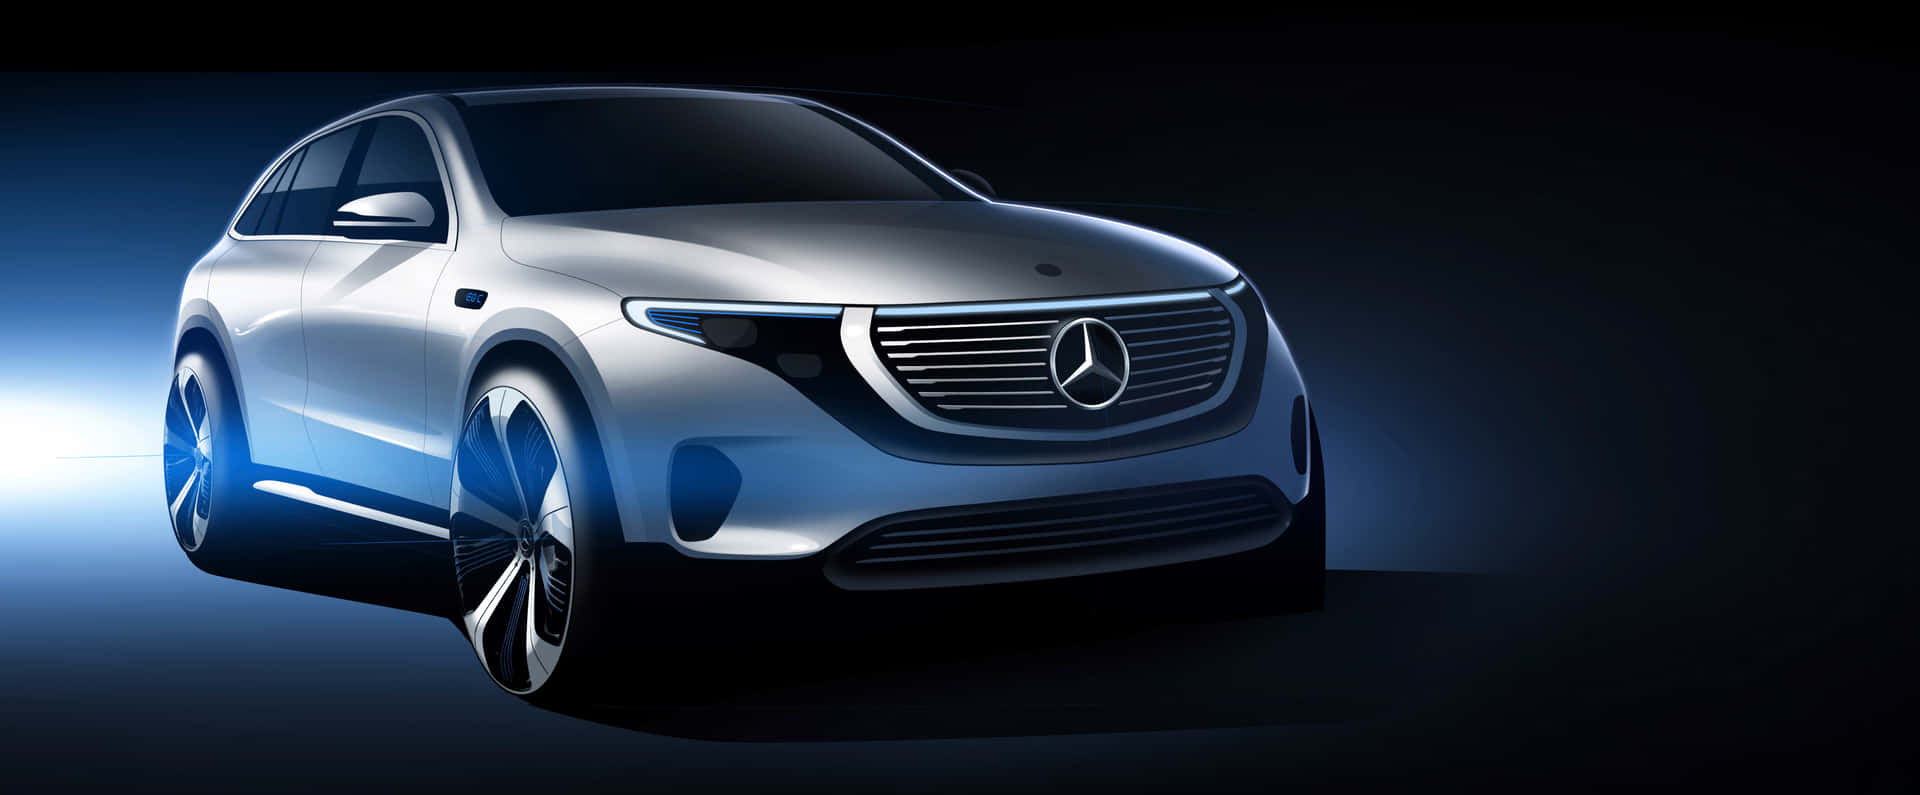 Caption: Cutting-edge Luxury - The Mercedes Benz Eqc Wallpaper